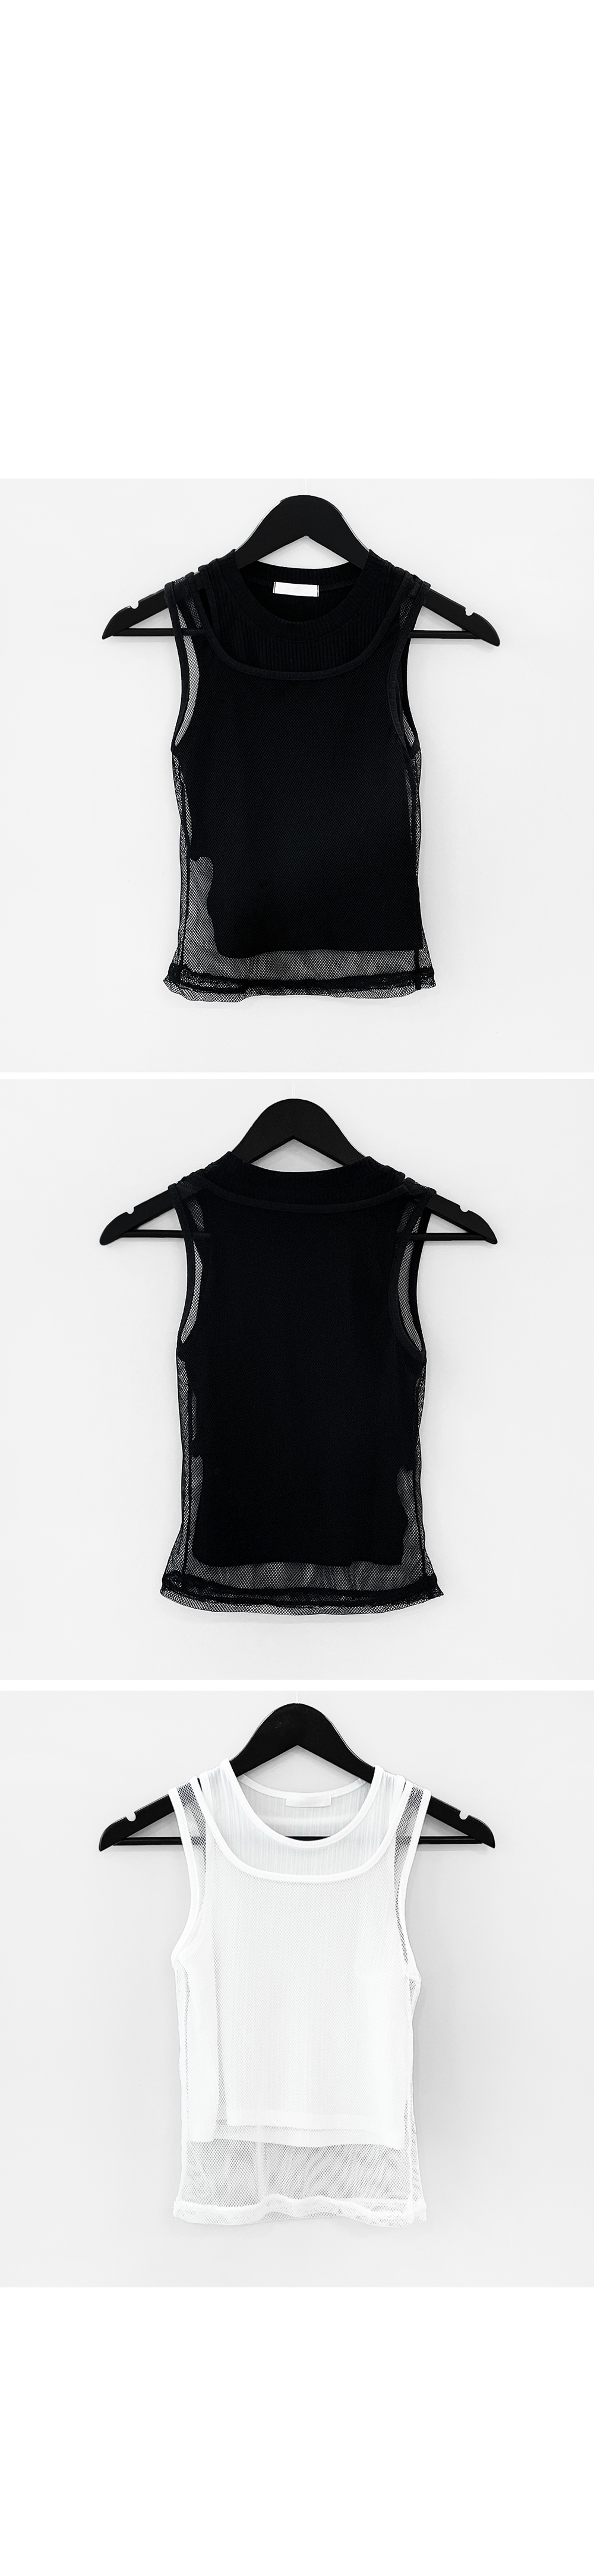 suspenders skirt/pants charcoal color image-S1L9